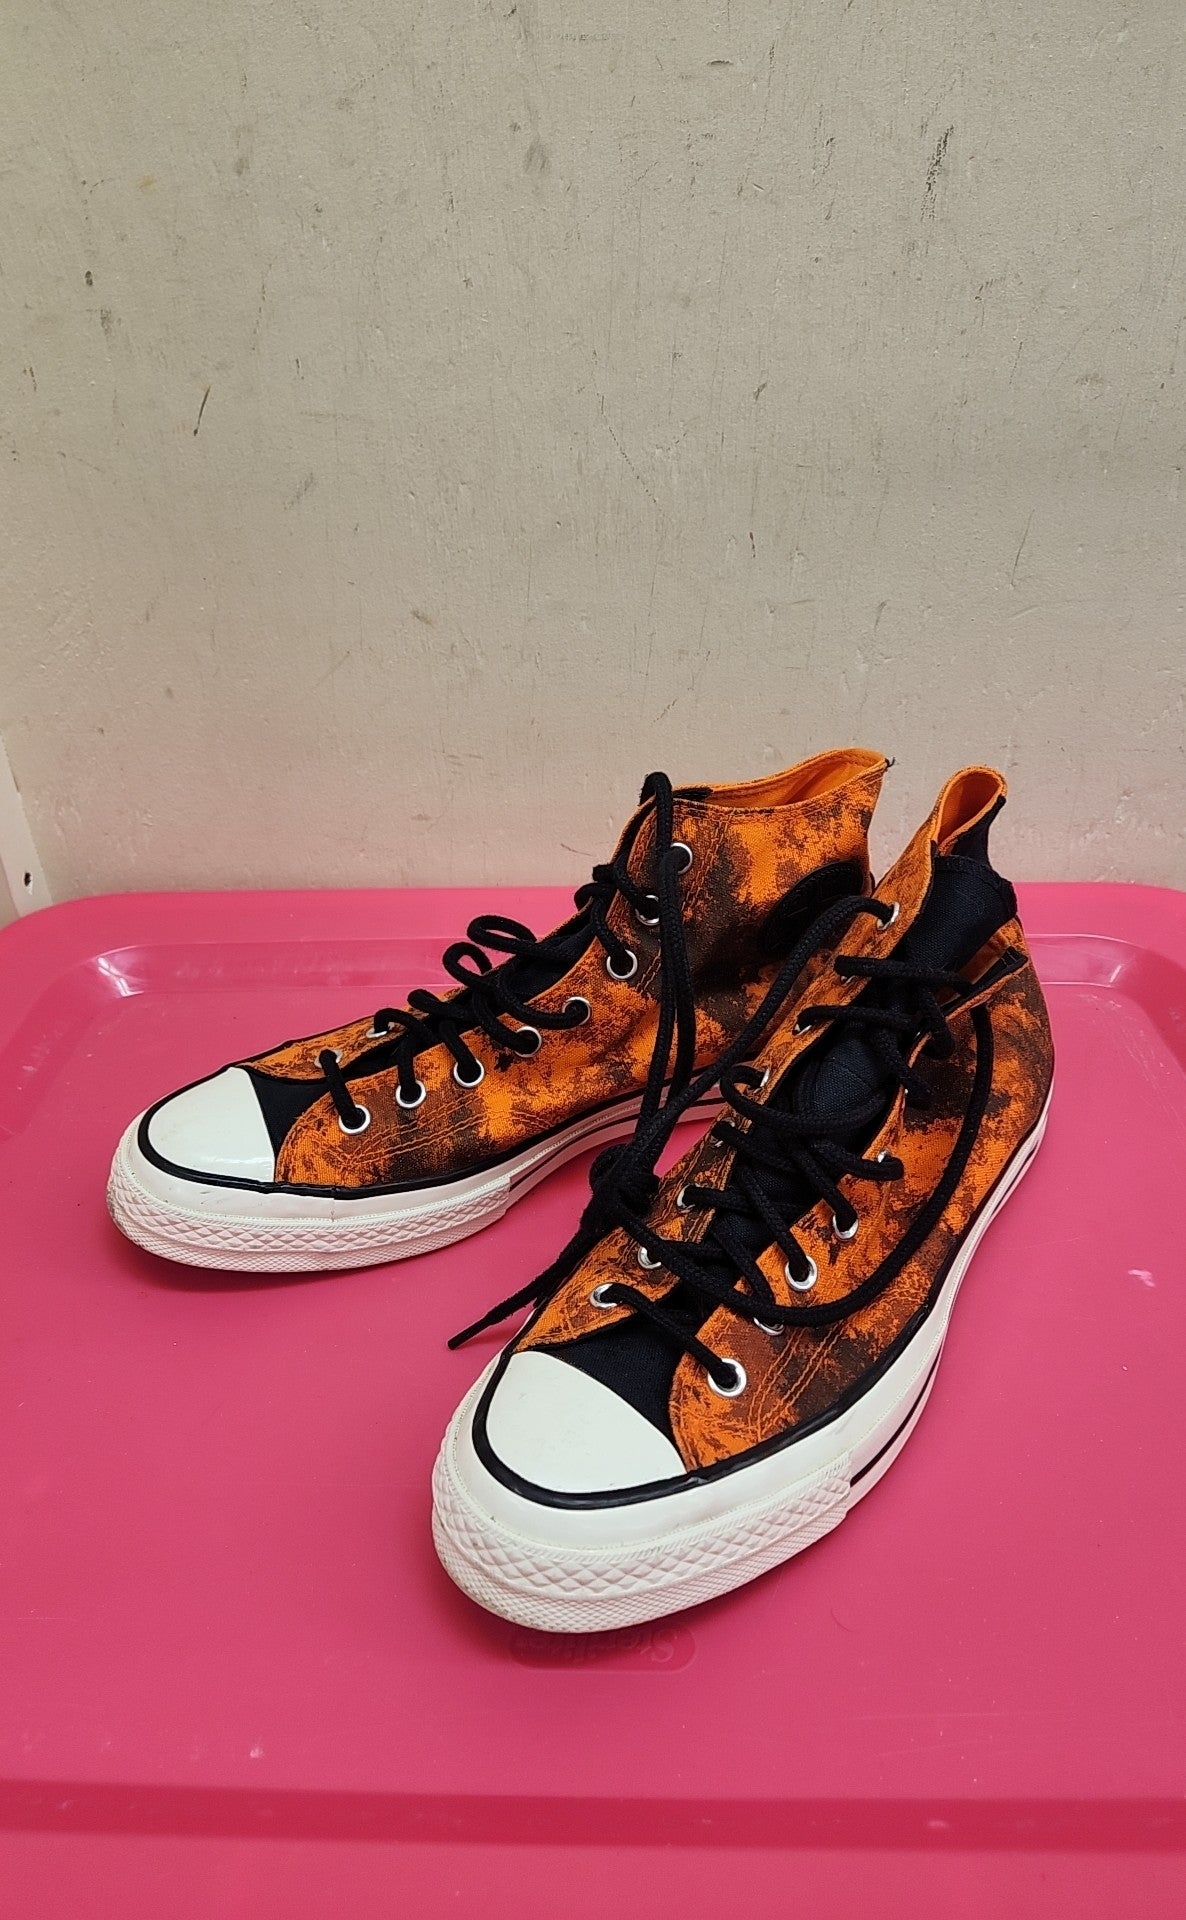 Converse Men's Size 9 Orange Sneakers